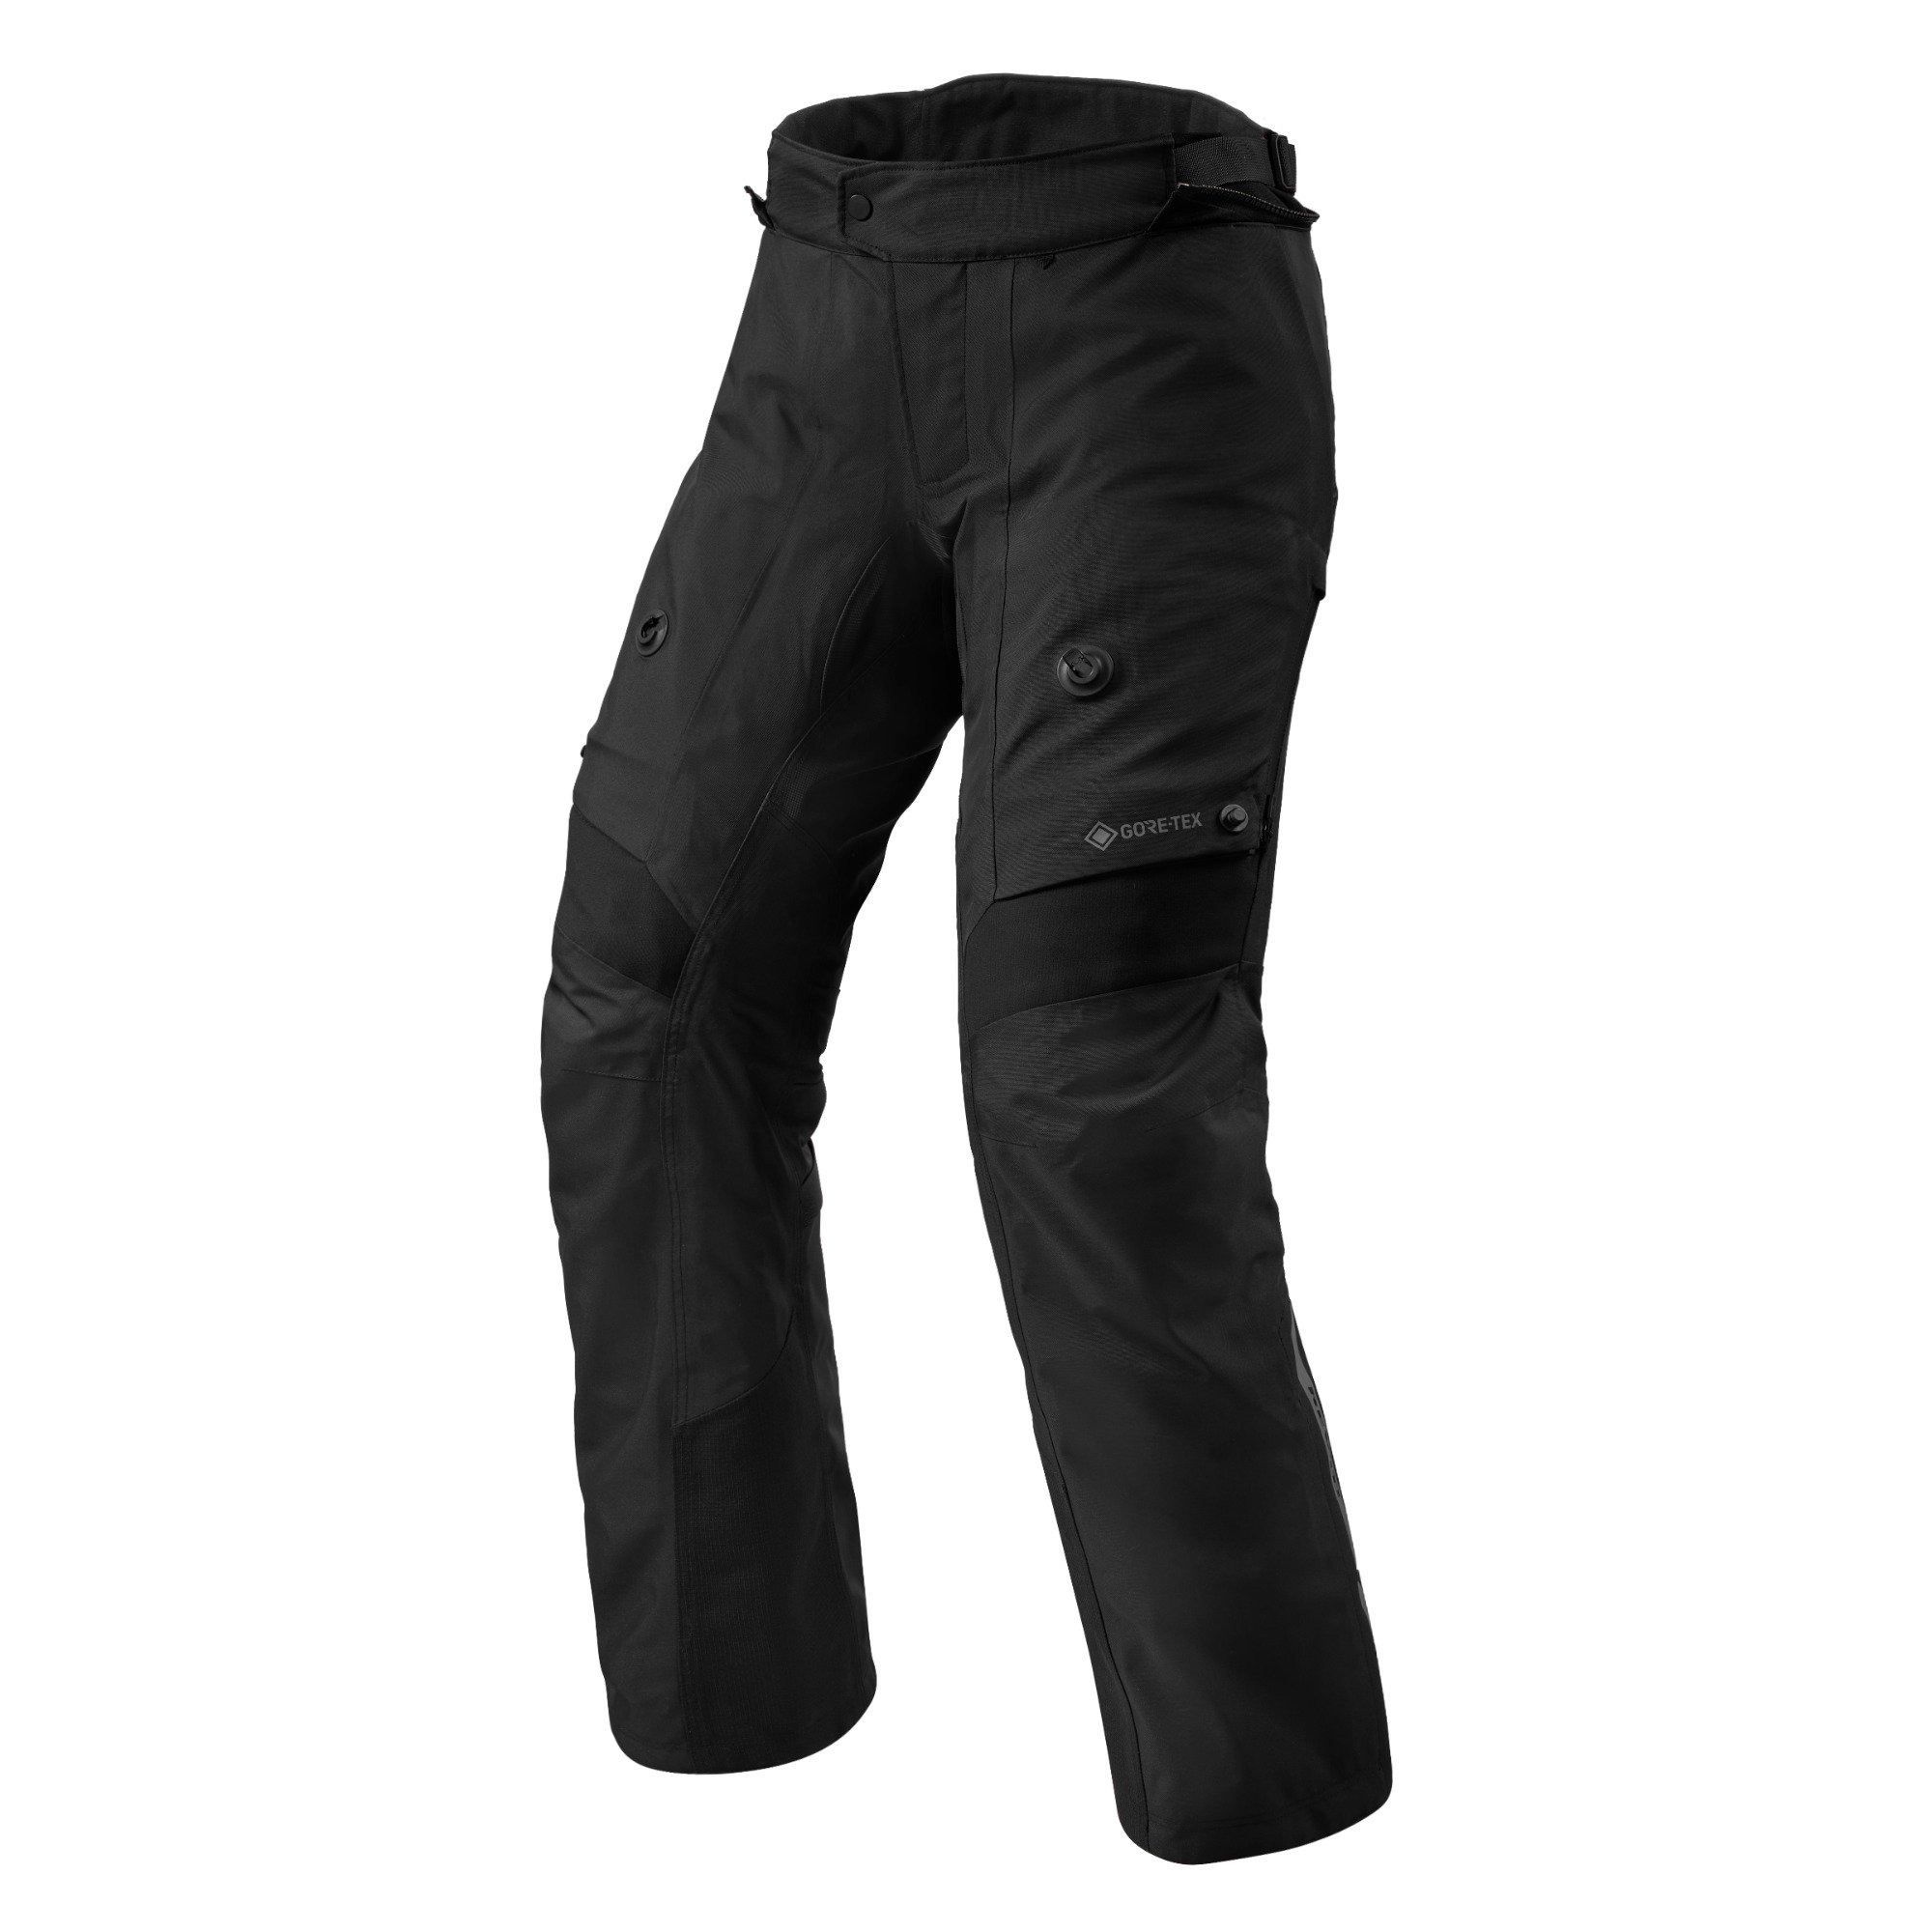 Image of REV'IT! Pants Poseidon 3 GTX Black Standard Motorcycle Pants Size S ID 8700001362436